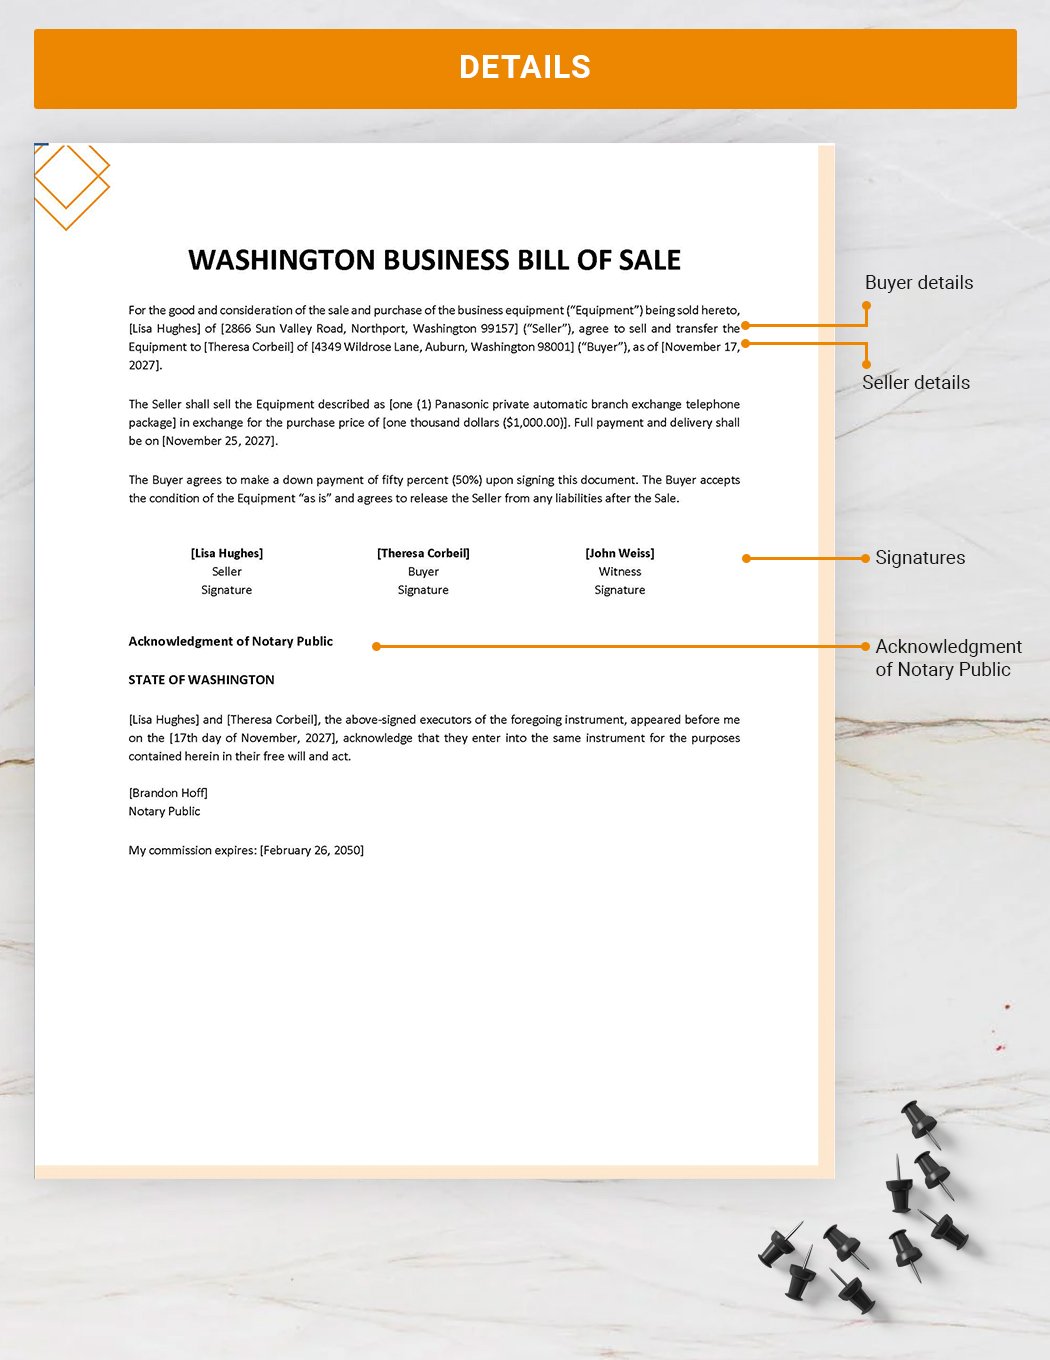 Washington Business Bill of Sale Template